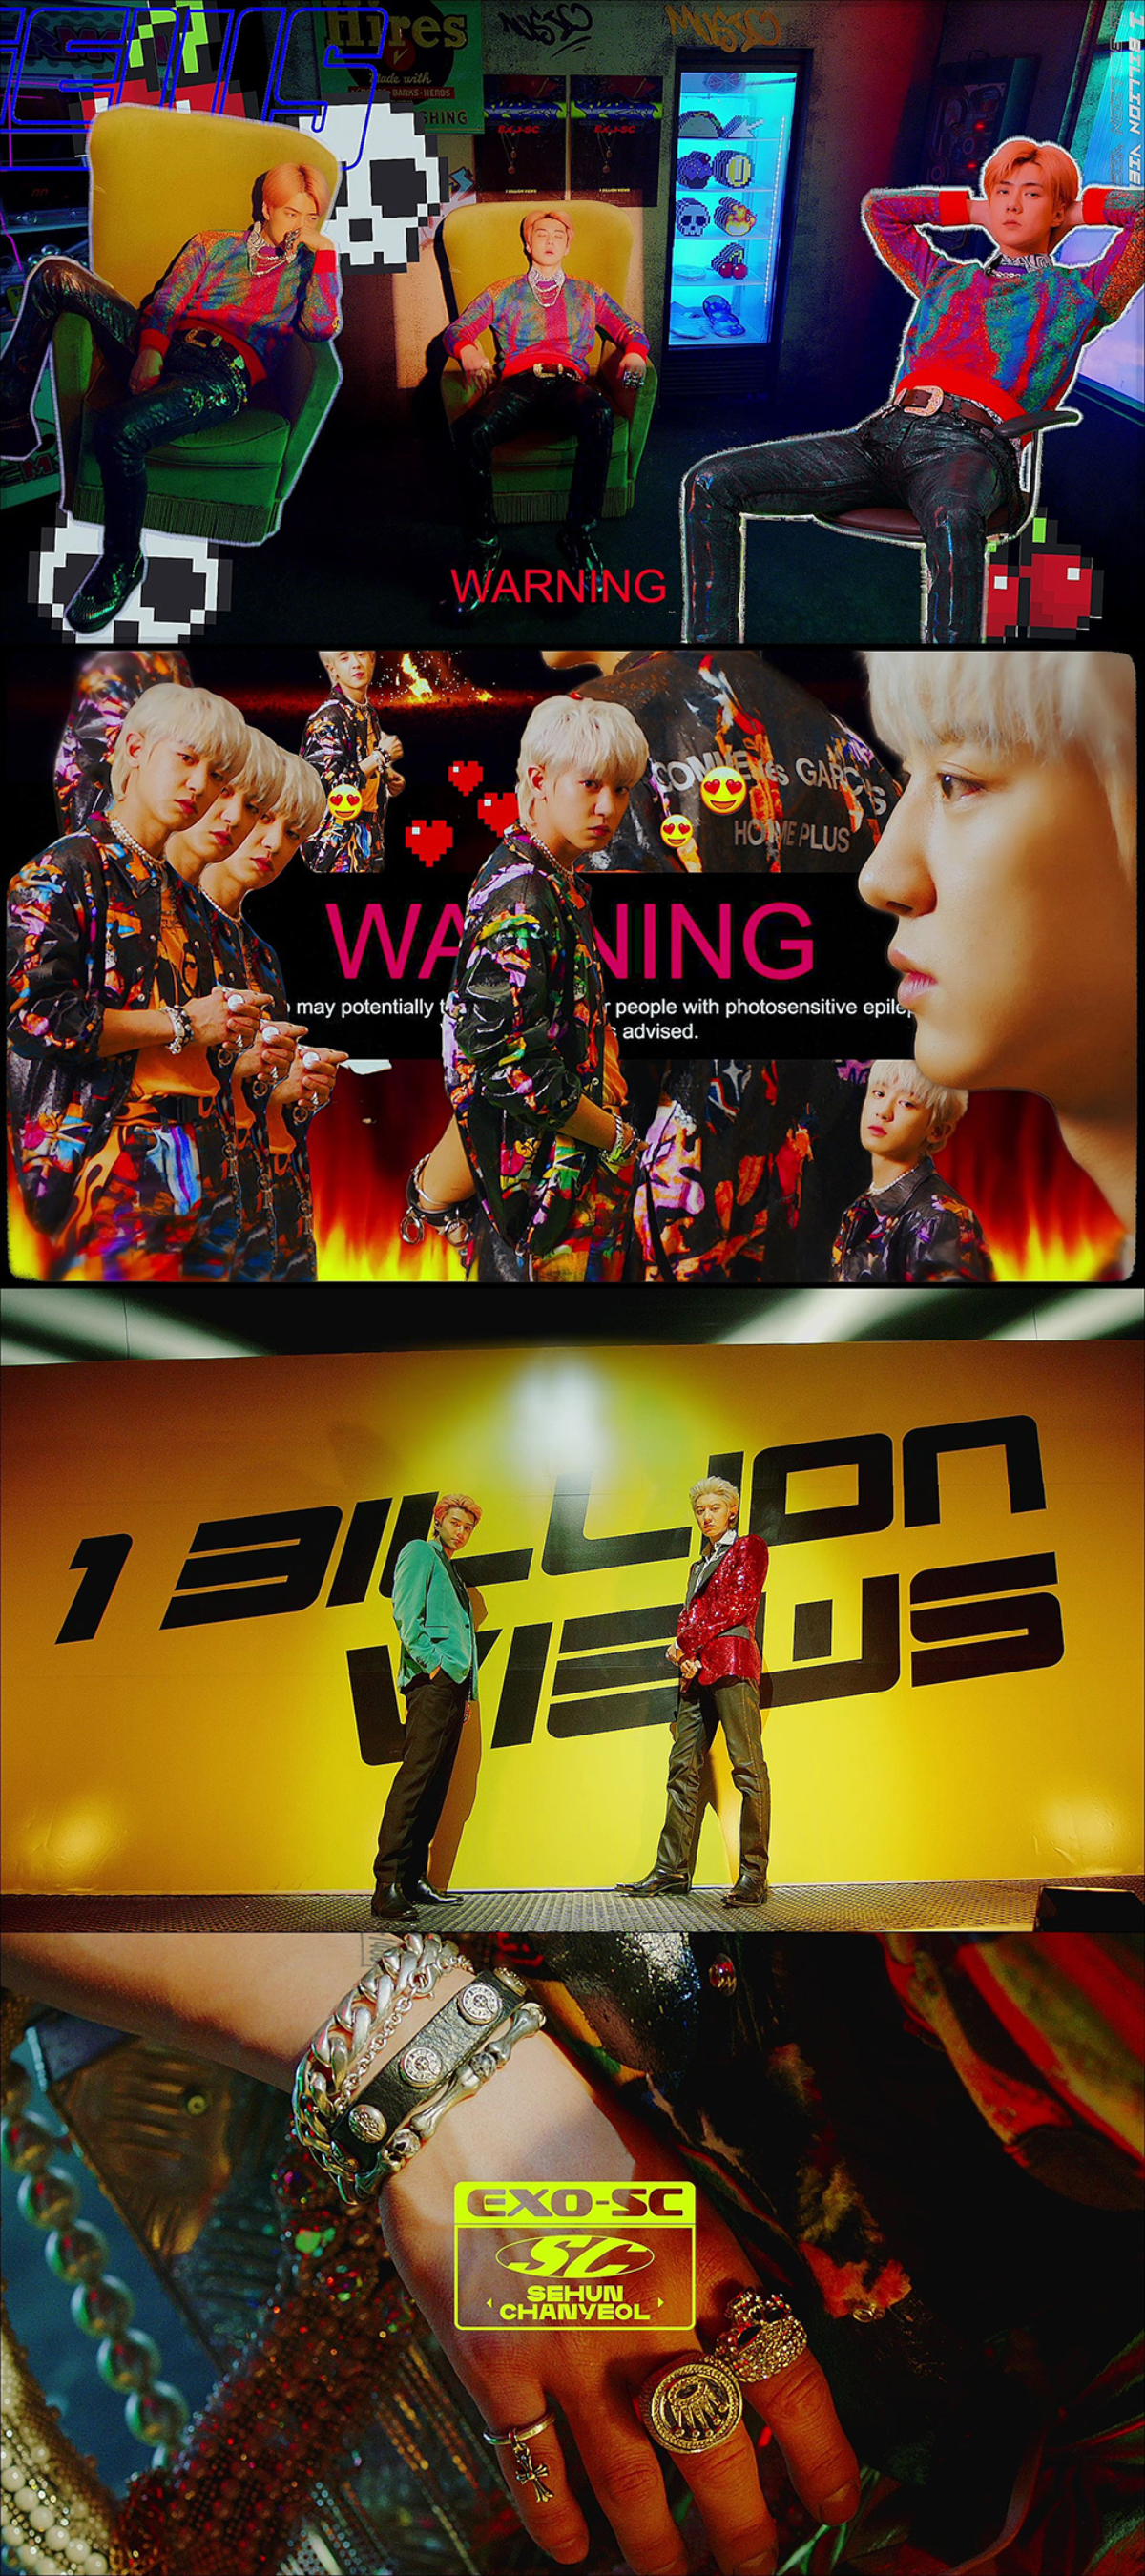 EXO Sehun & Chanyeol, '1 Billion Views' MV teaser video Released on July 11